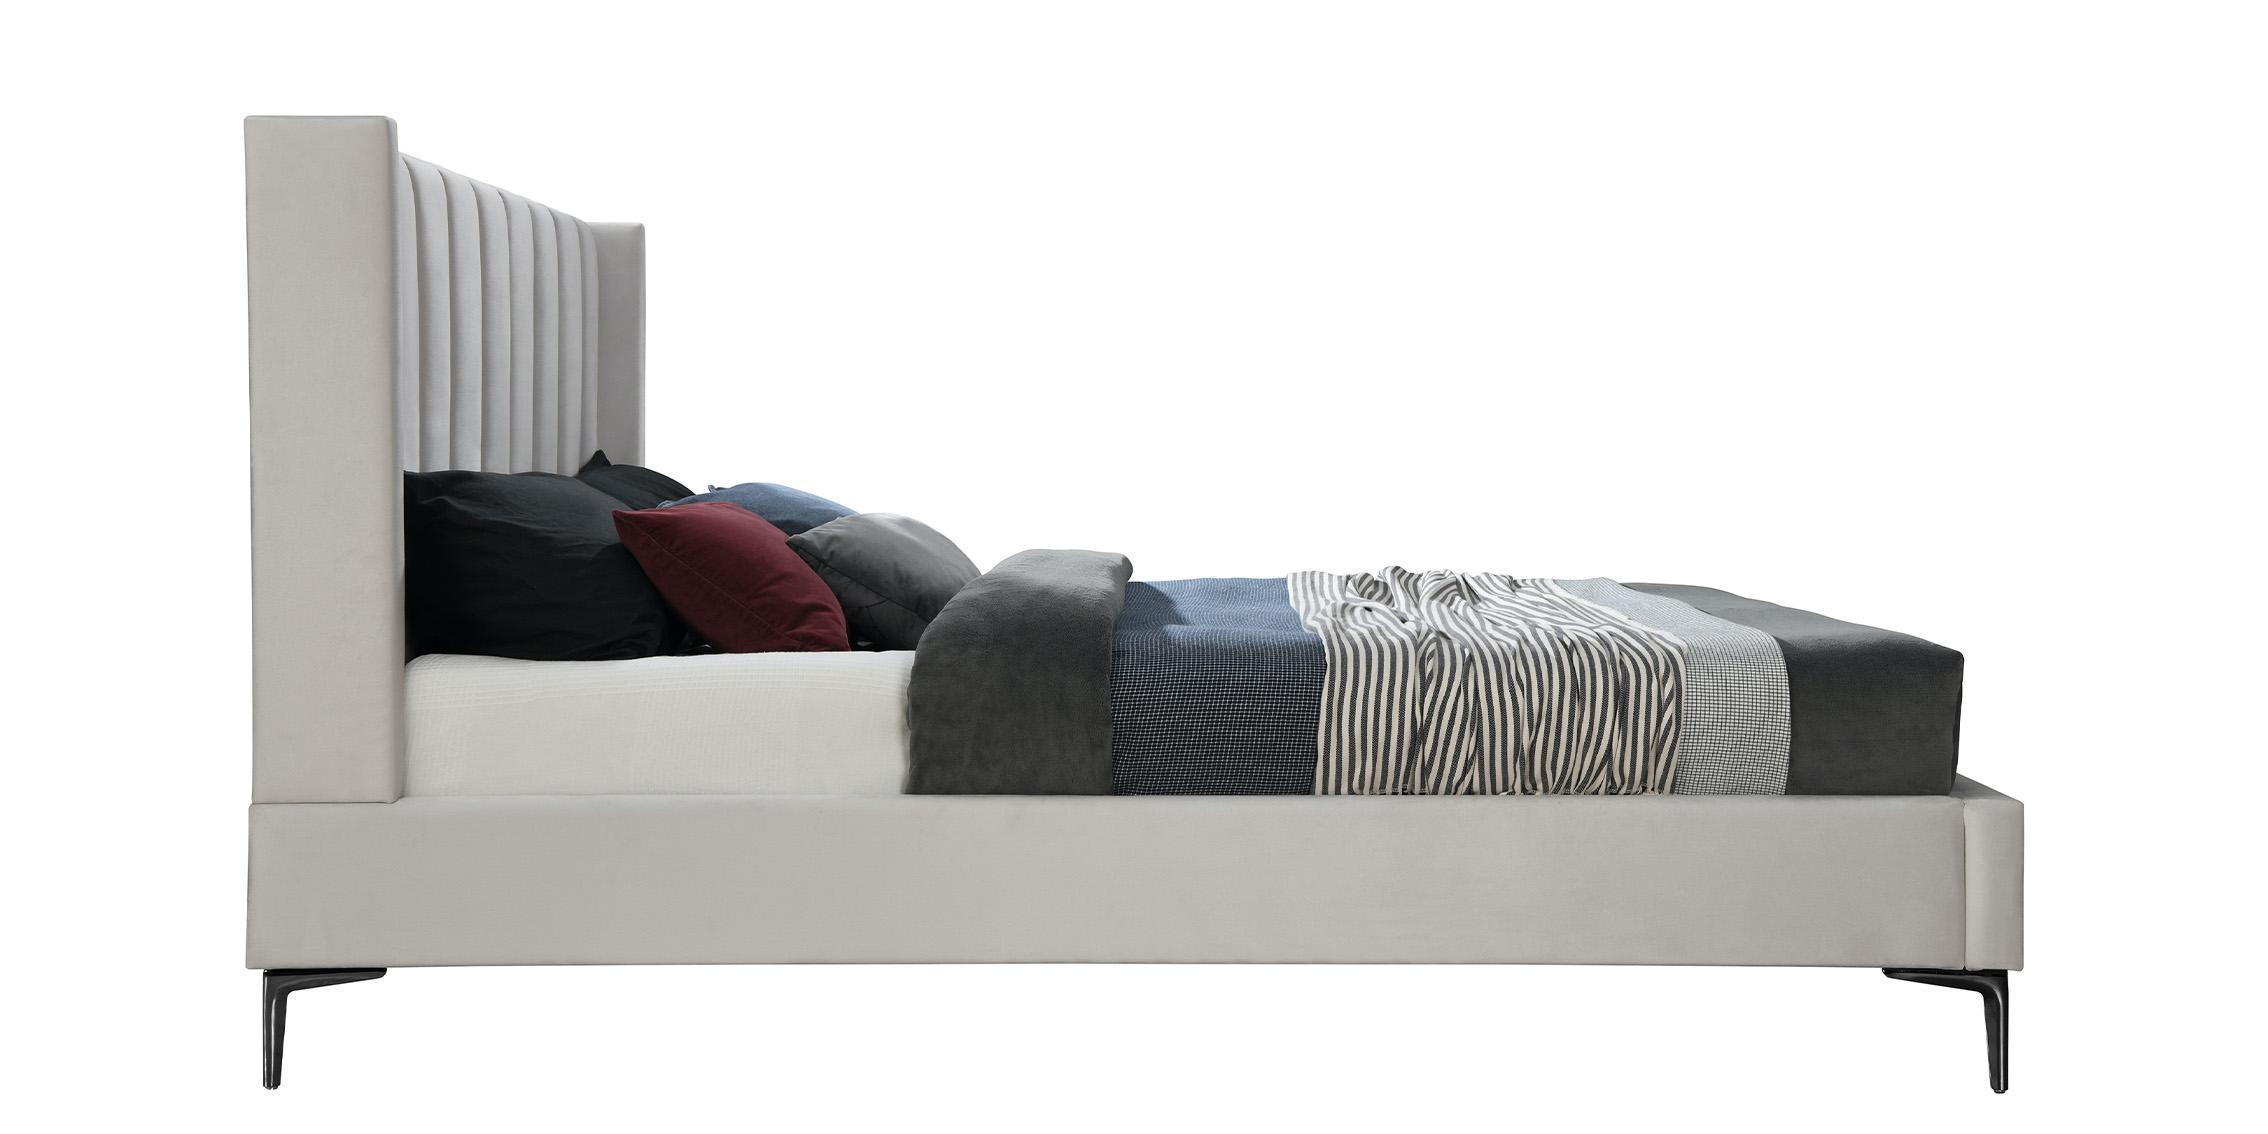 

    
NadiaCream-Q Meridian Furniture Platform Bed
